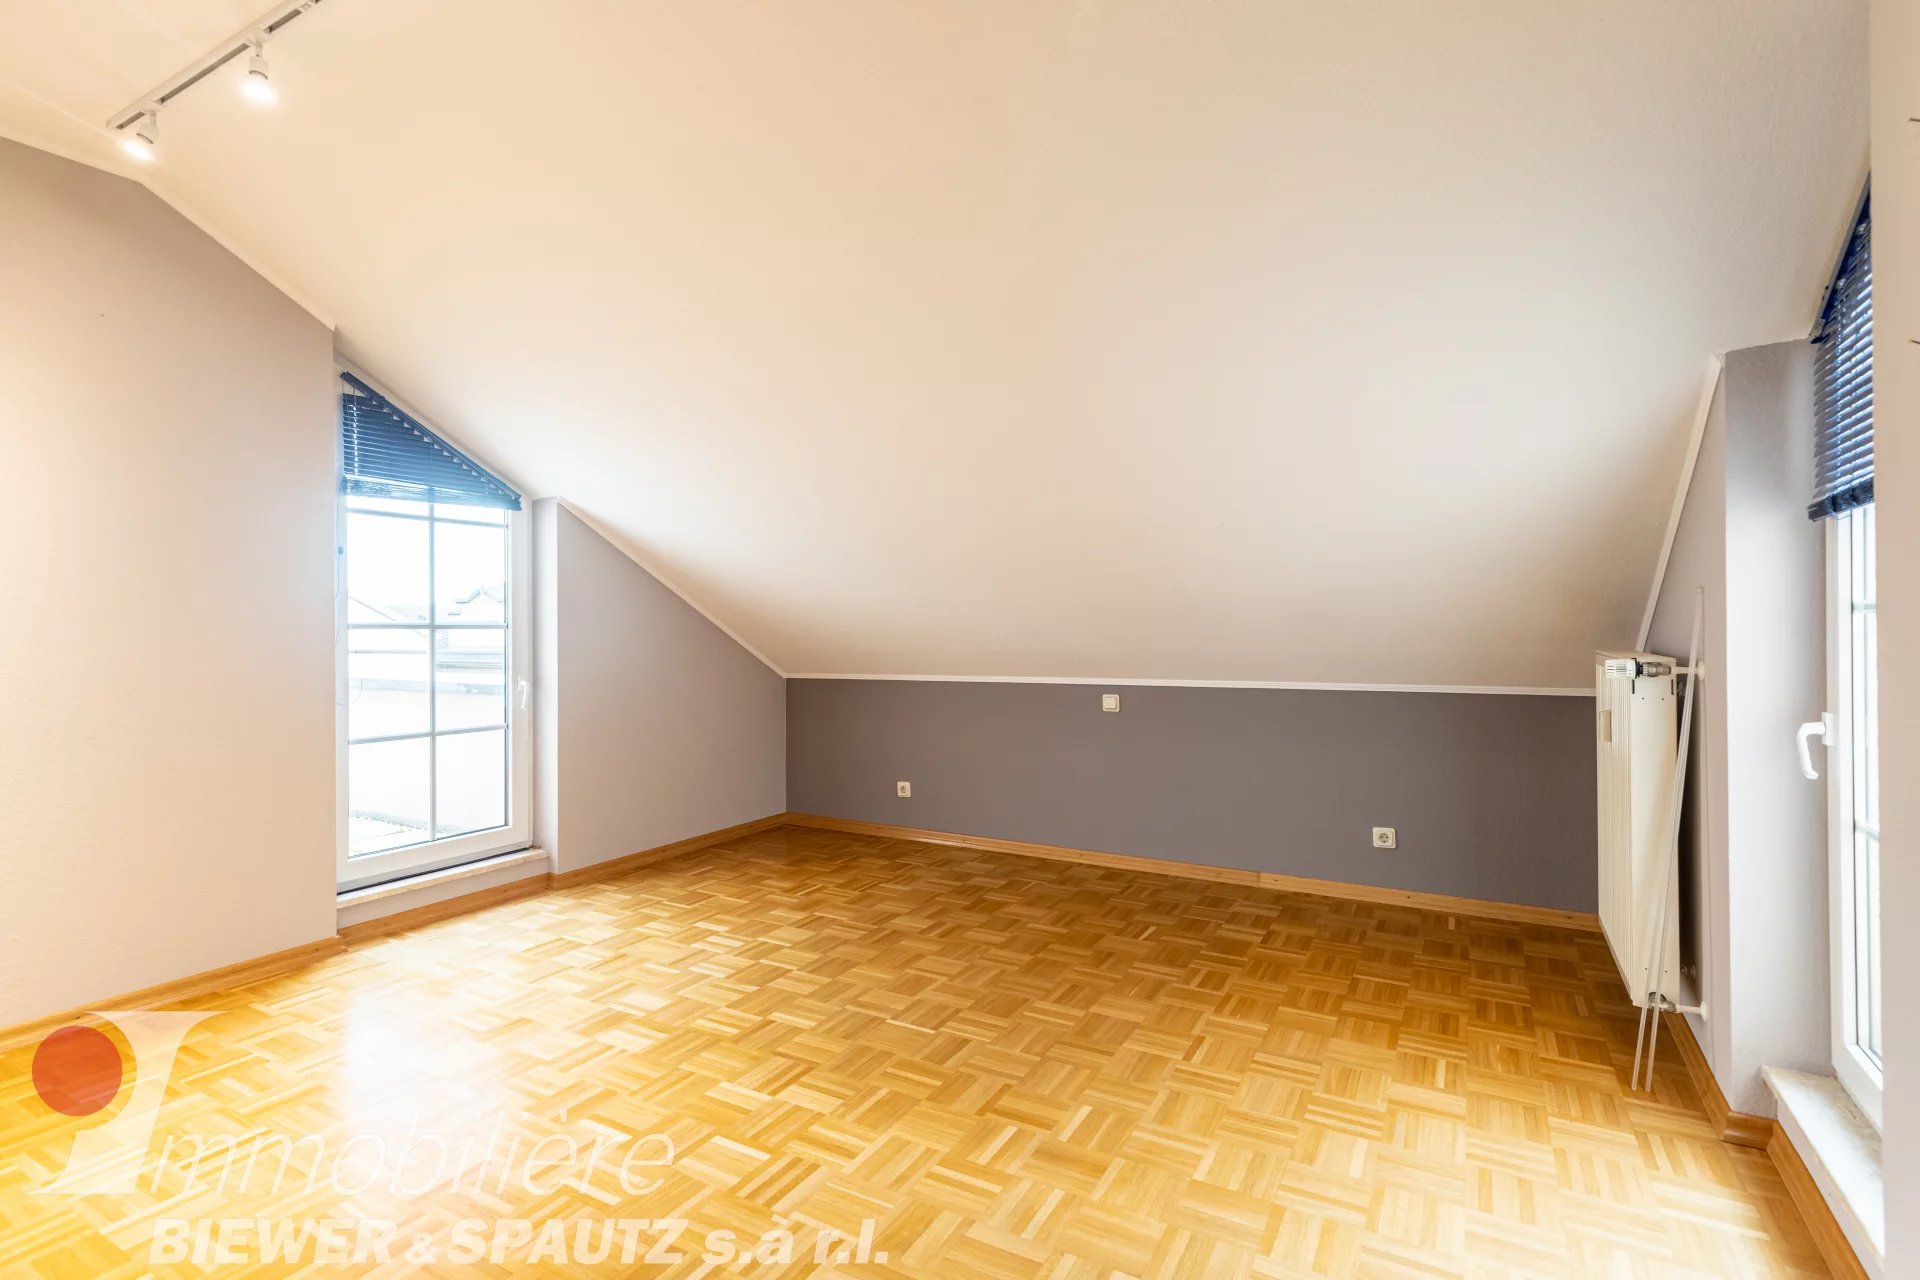 RENTED - Apartment with 2 bedrooms in Echternach